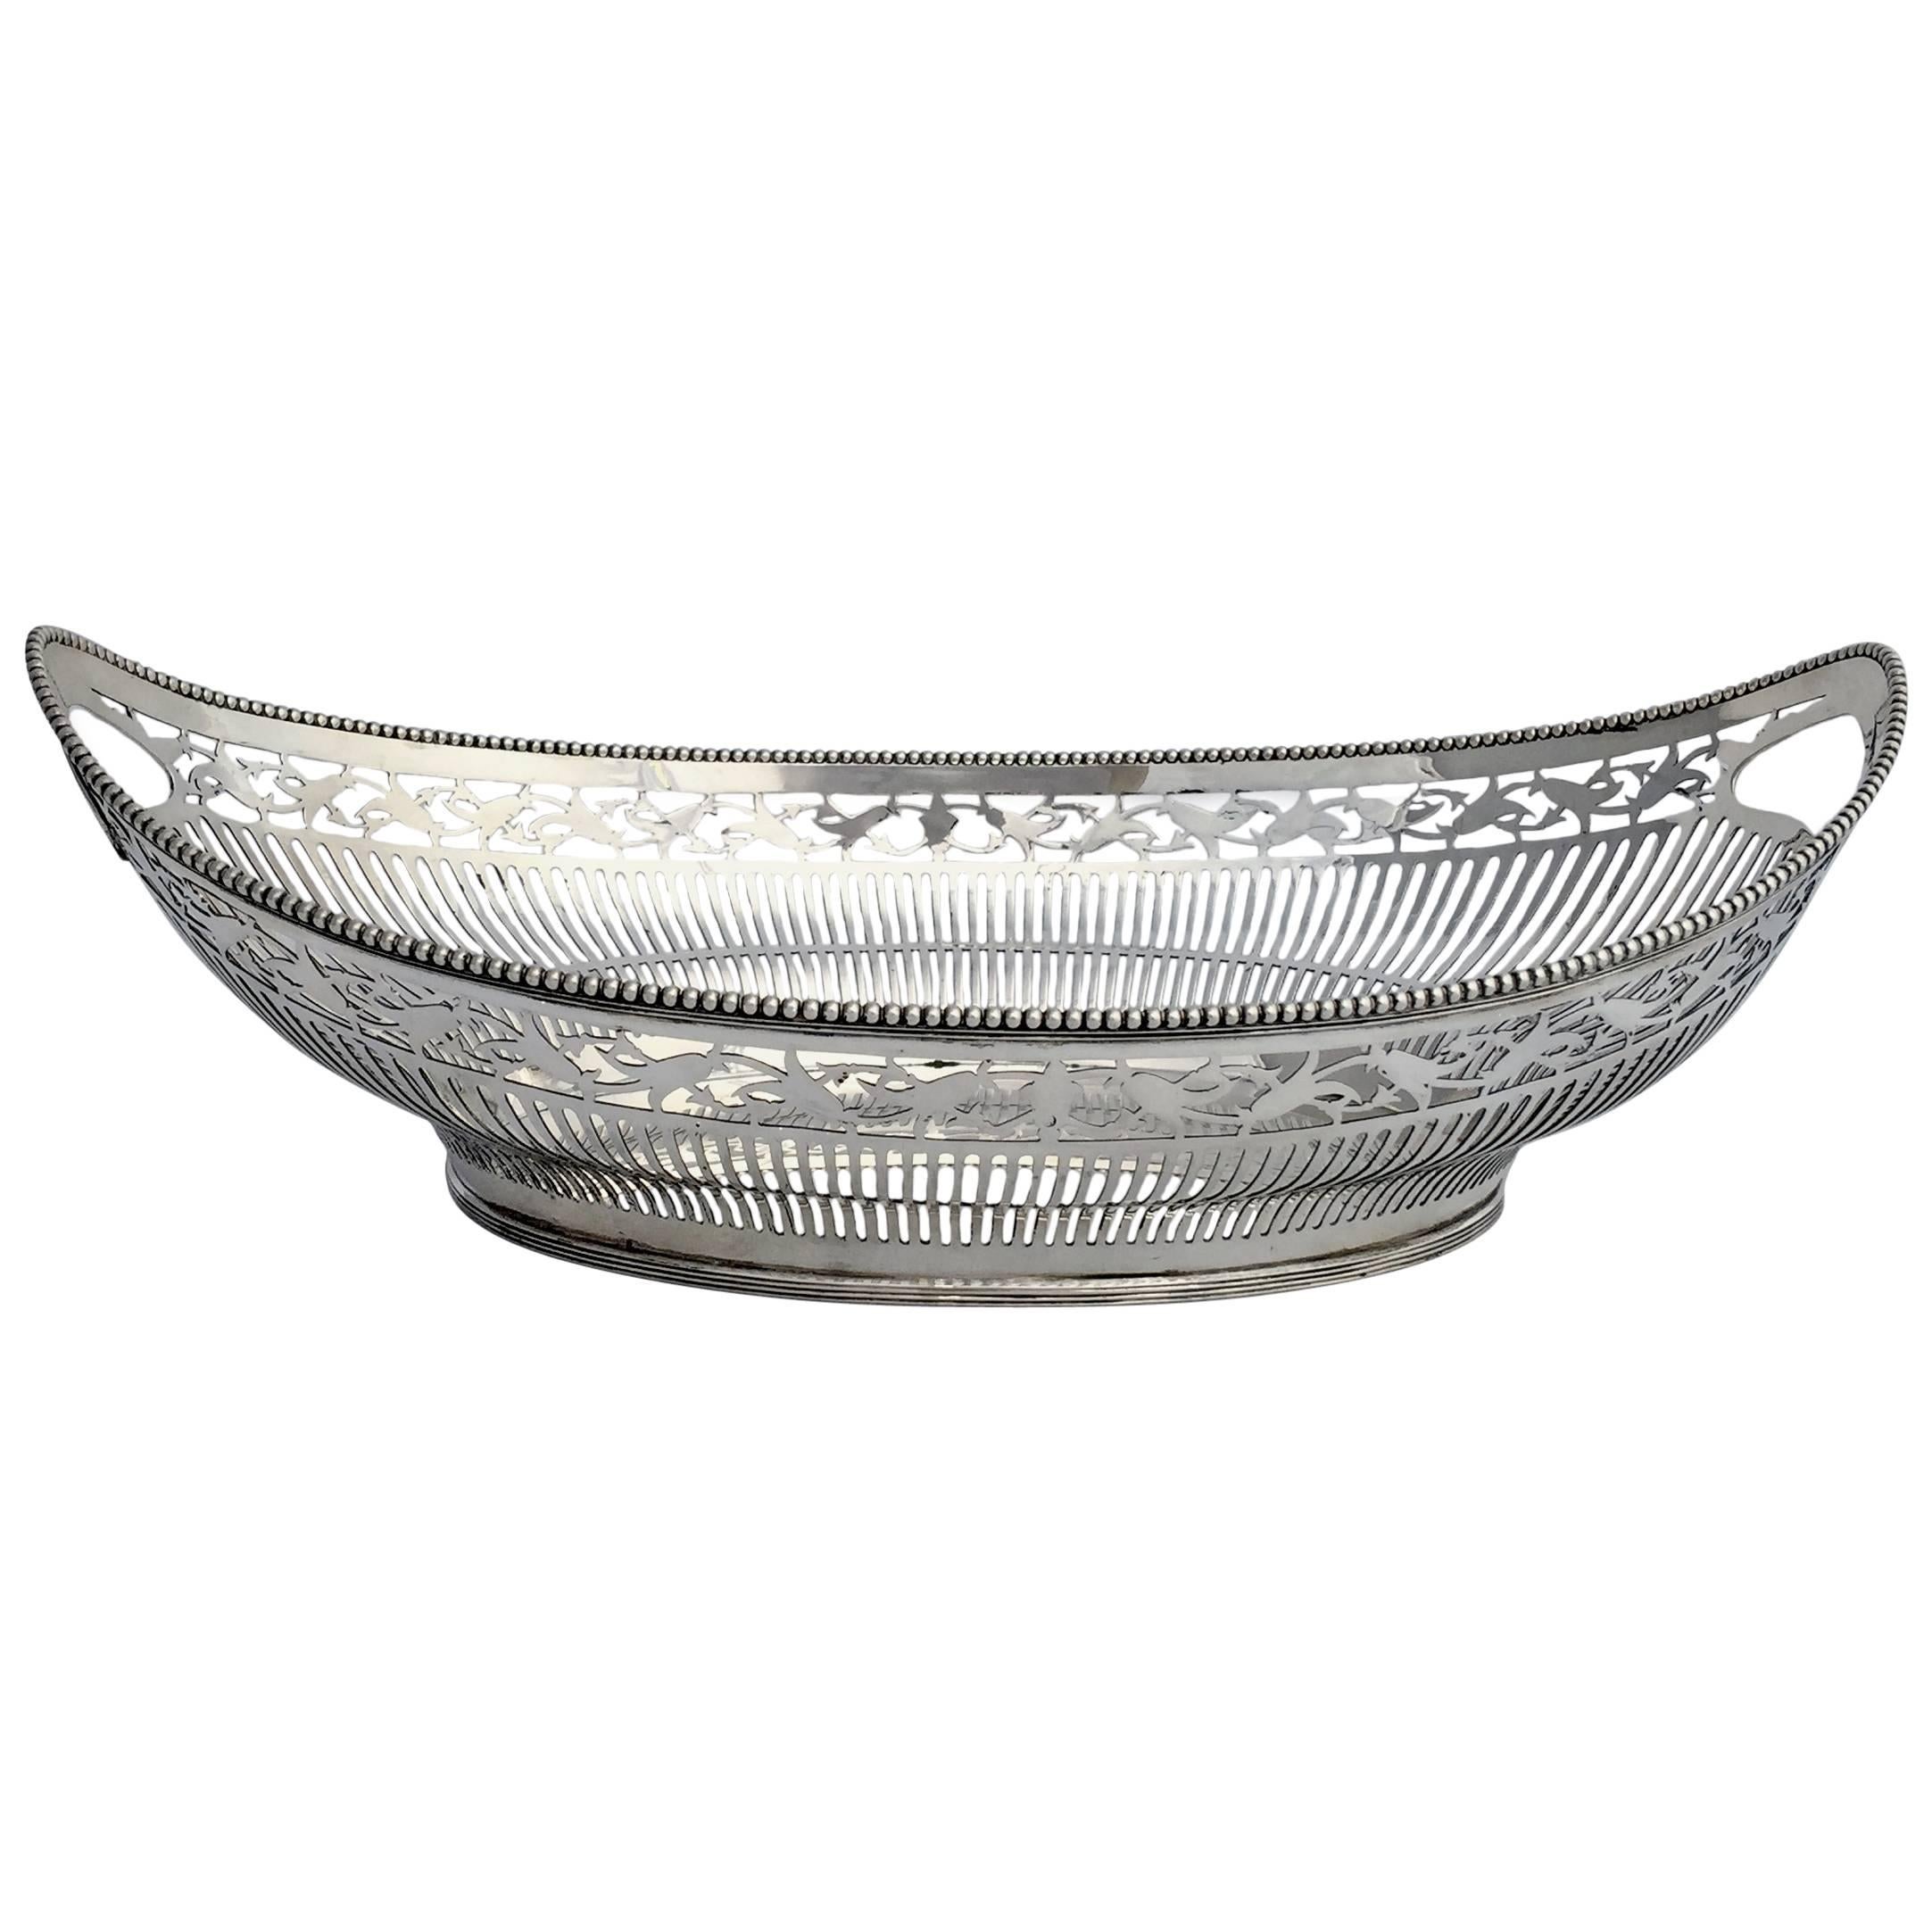 Early 20th Century Dutch Sterling Silver Bread Basket in Art Nouveau Style